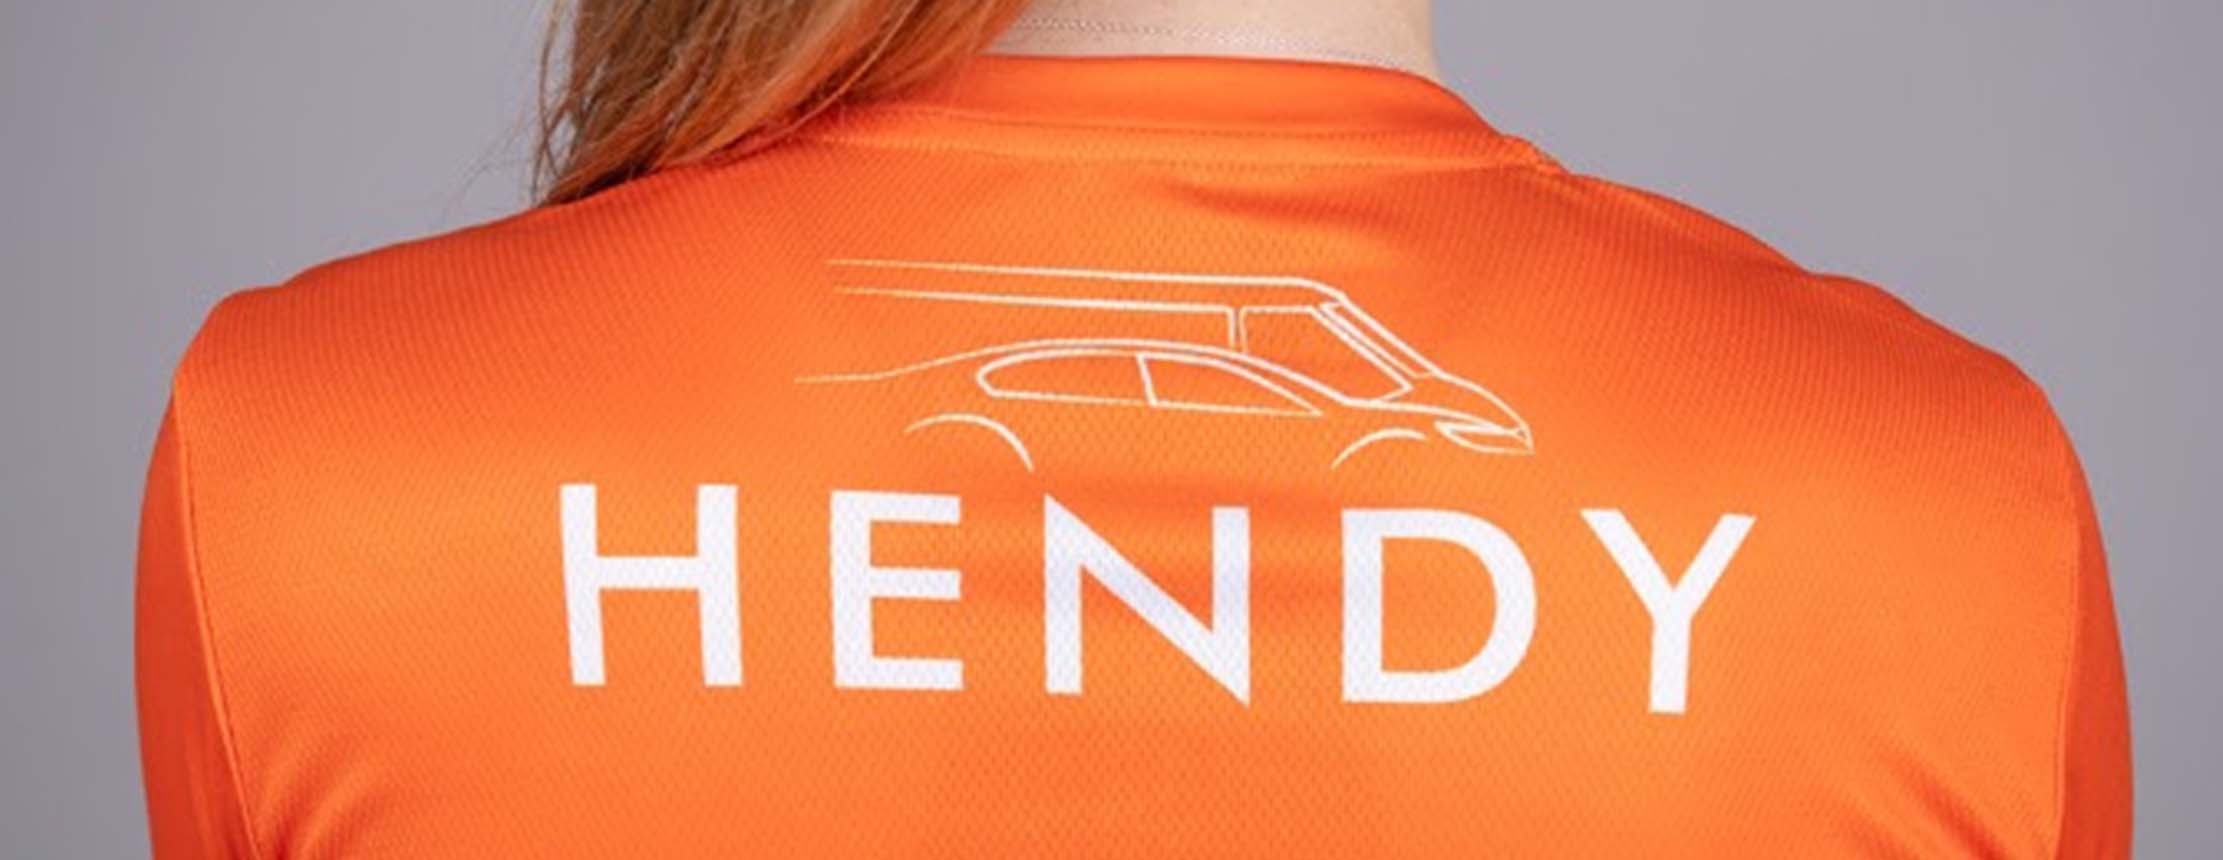 Hendy sponsorship on t-shirt